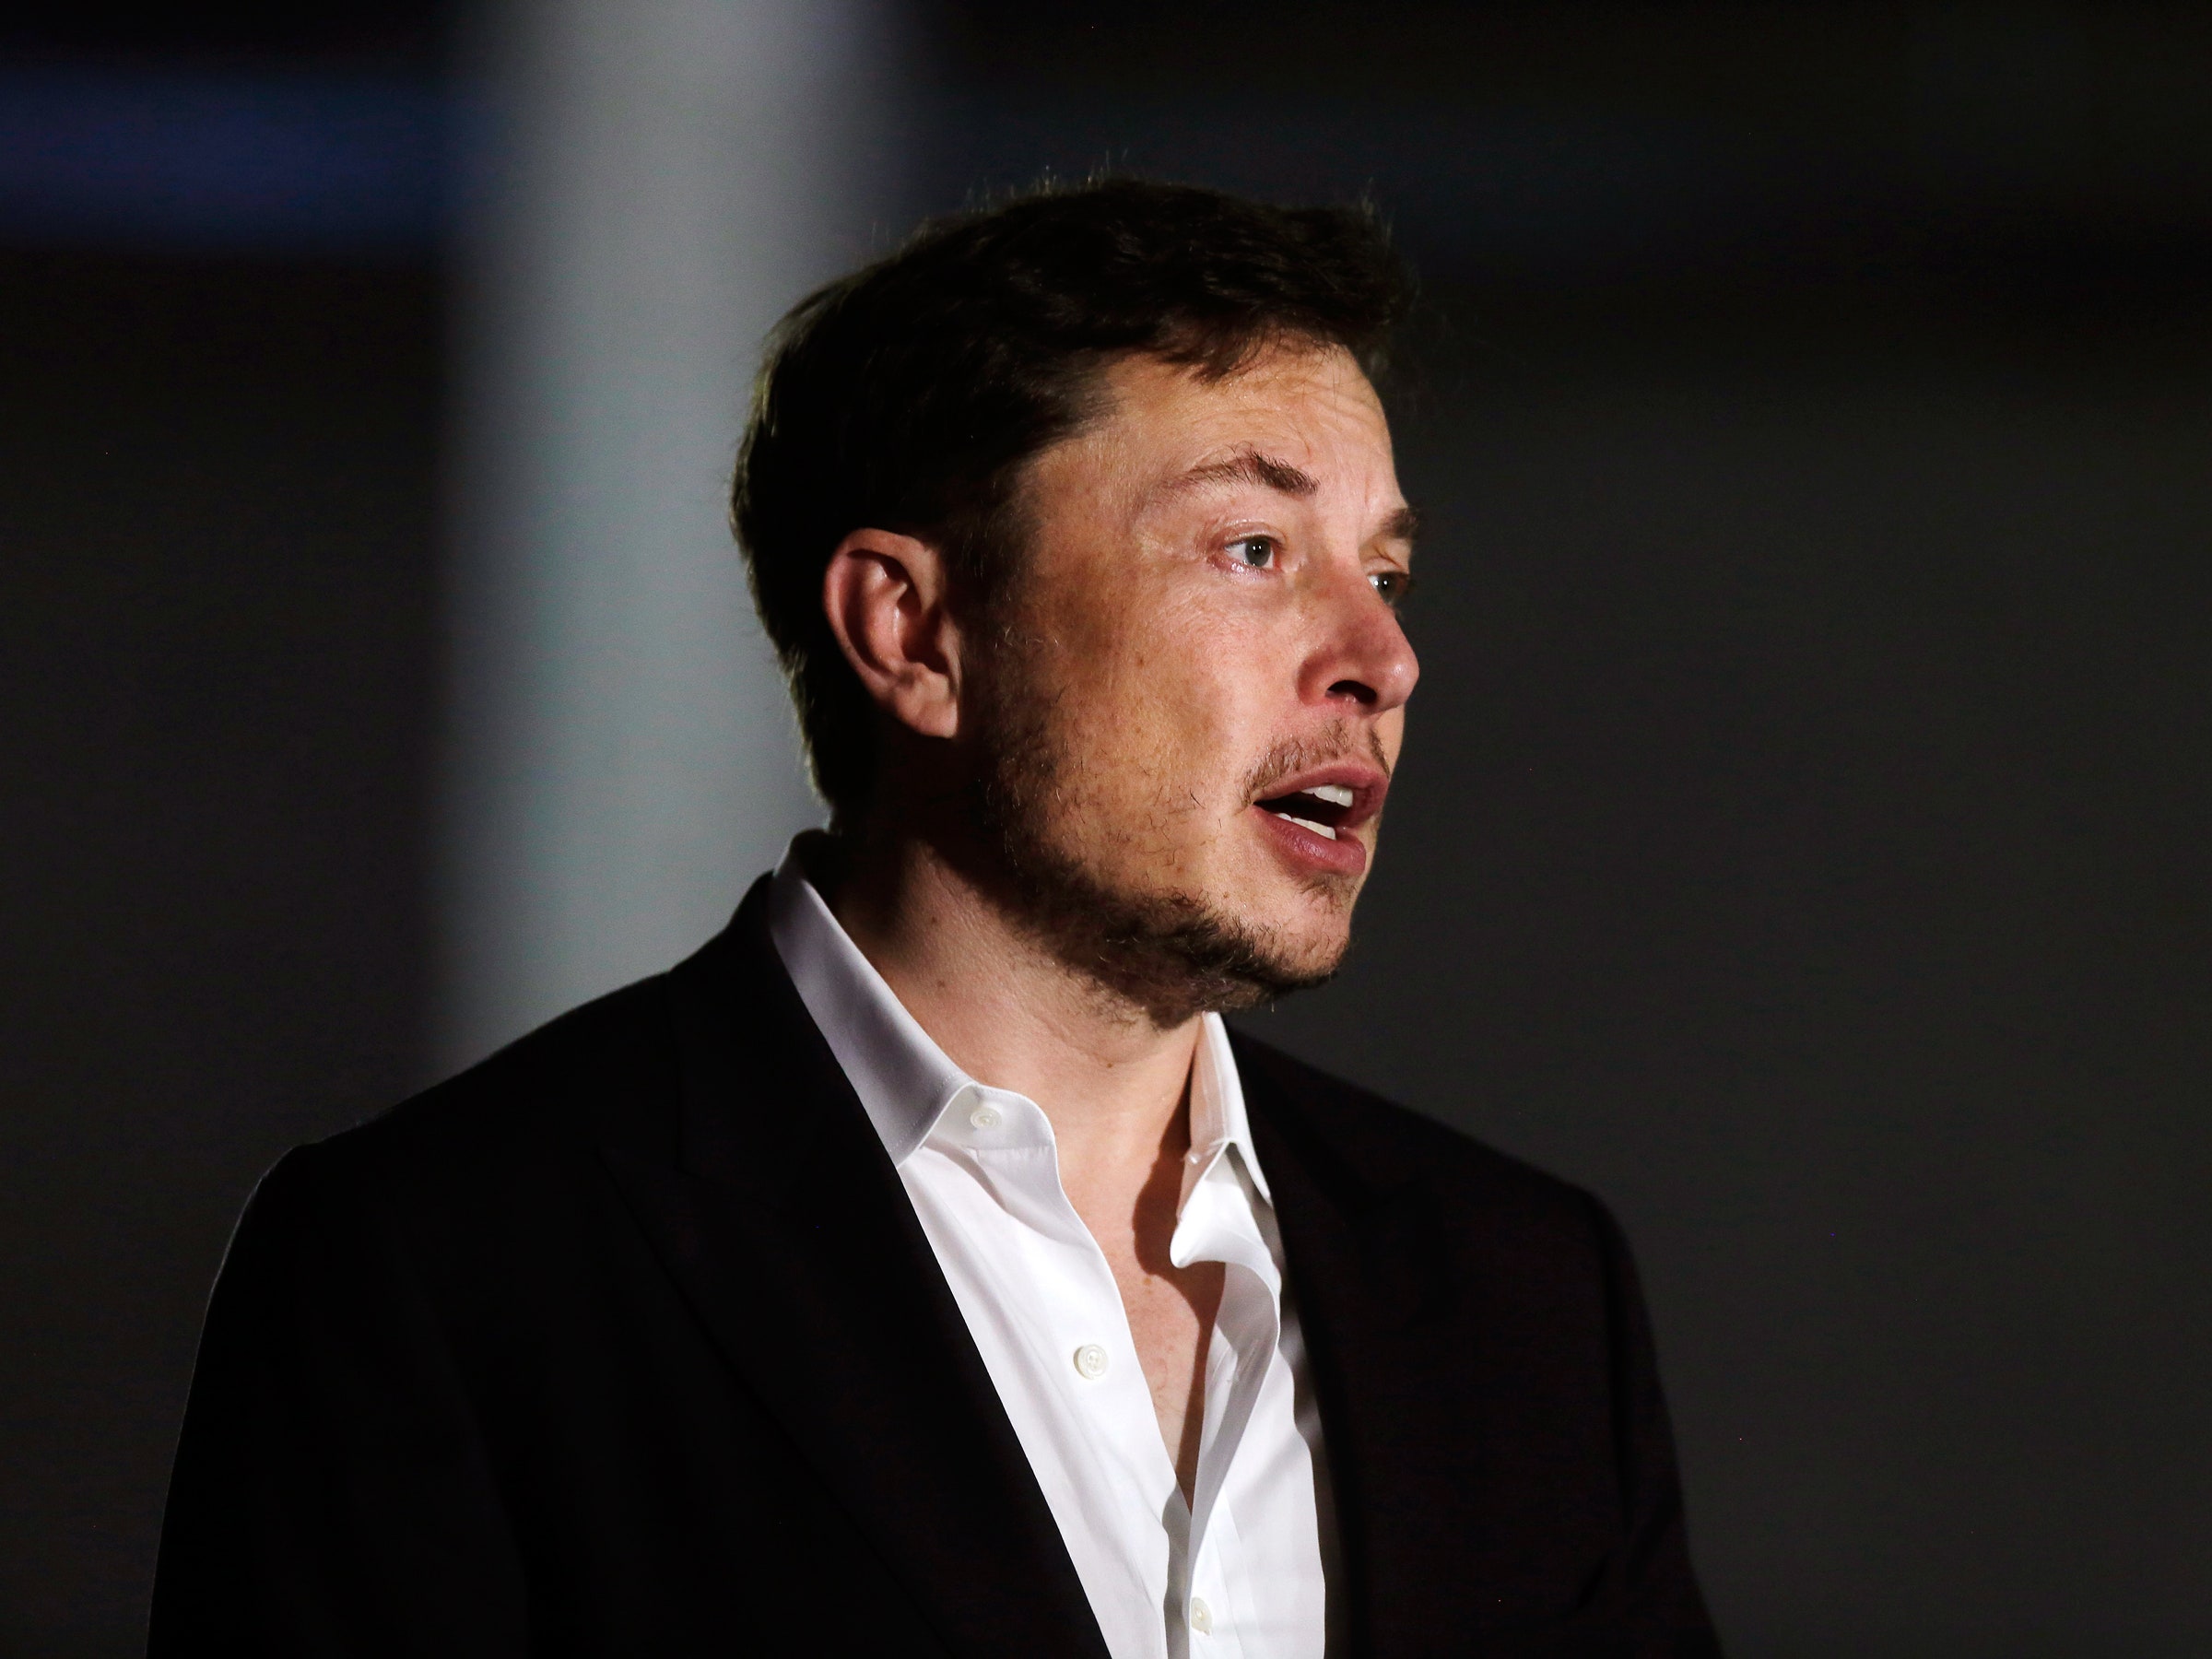 JPMorgan Tesla Elon Musk Twitter